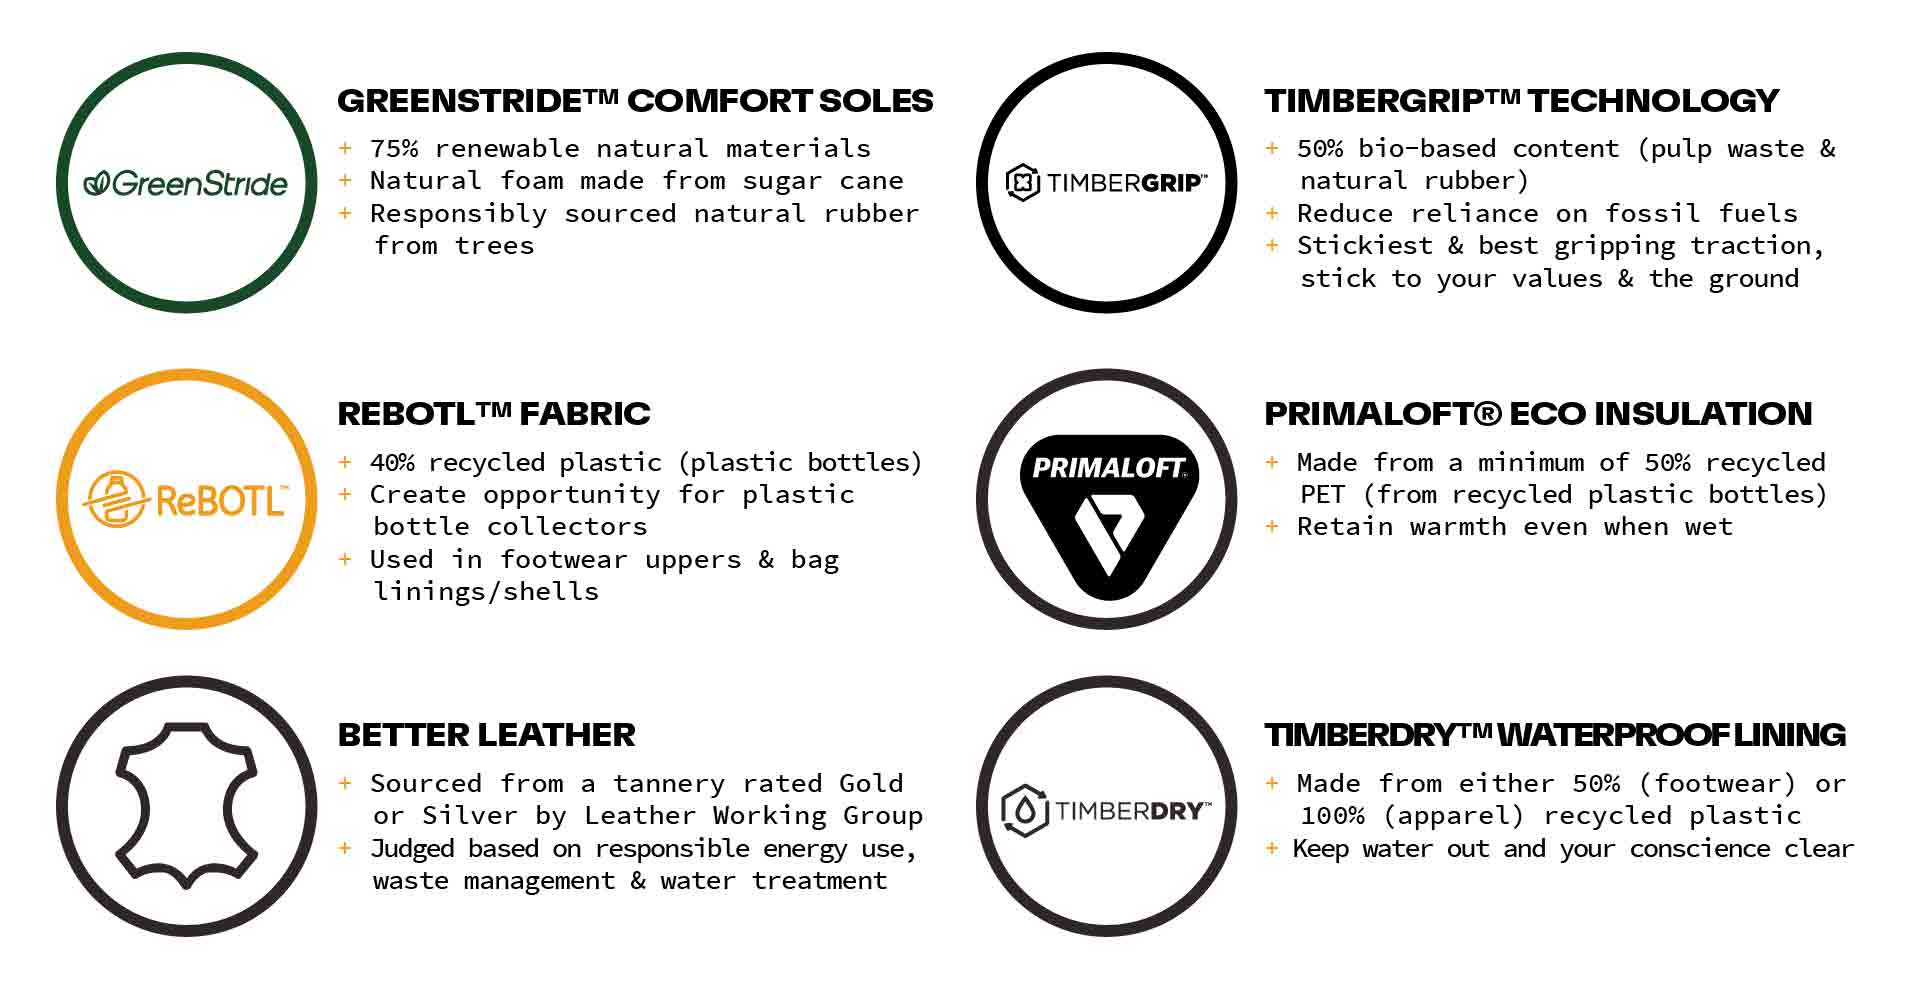 Timberland footwear & apparel technology